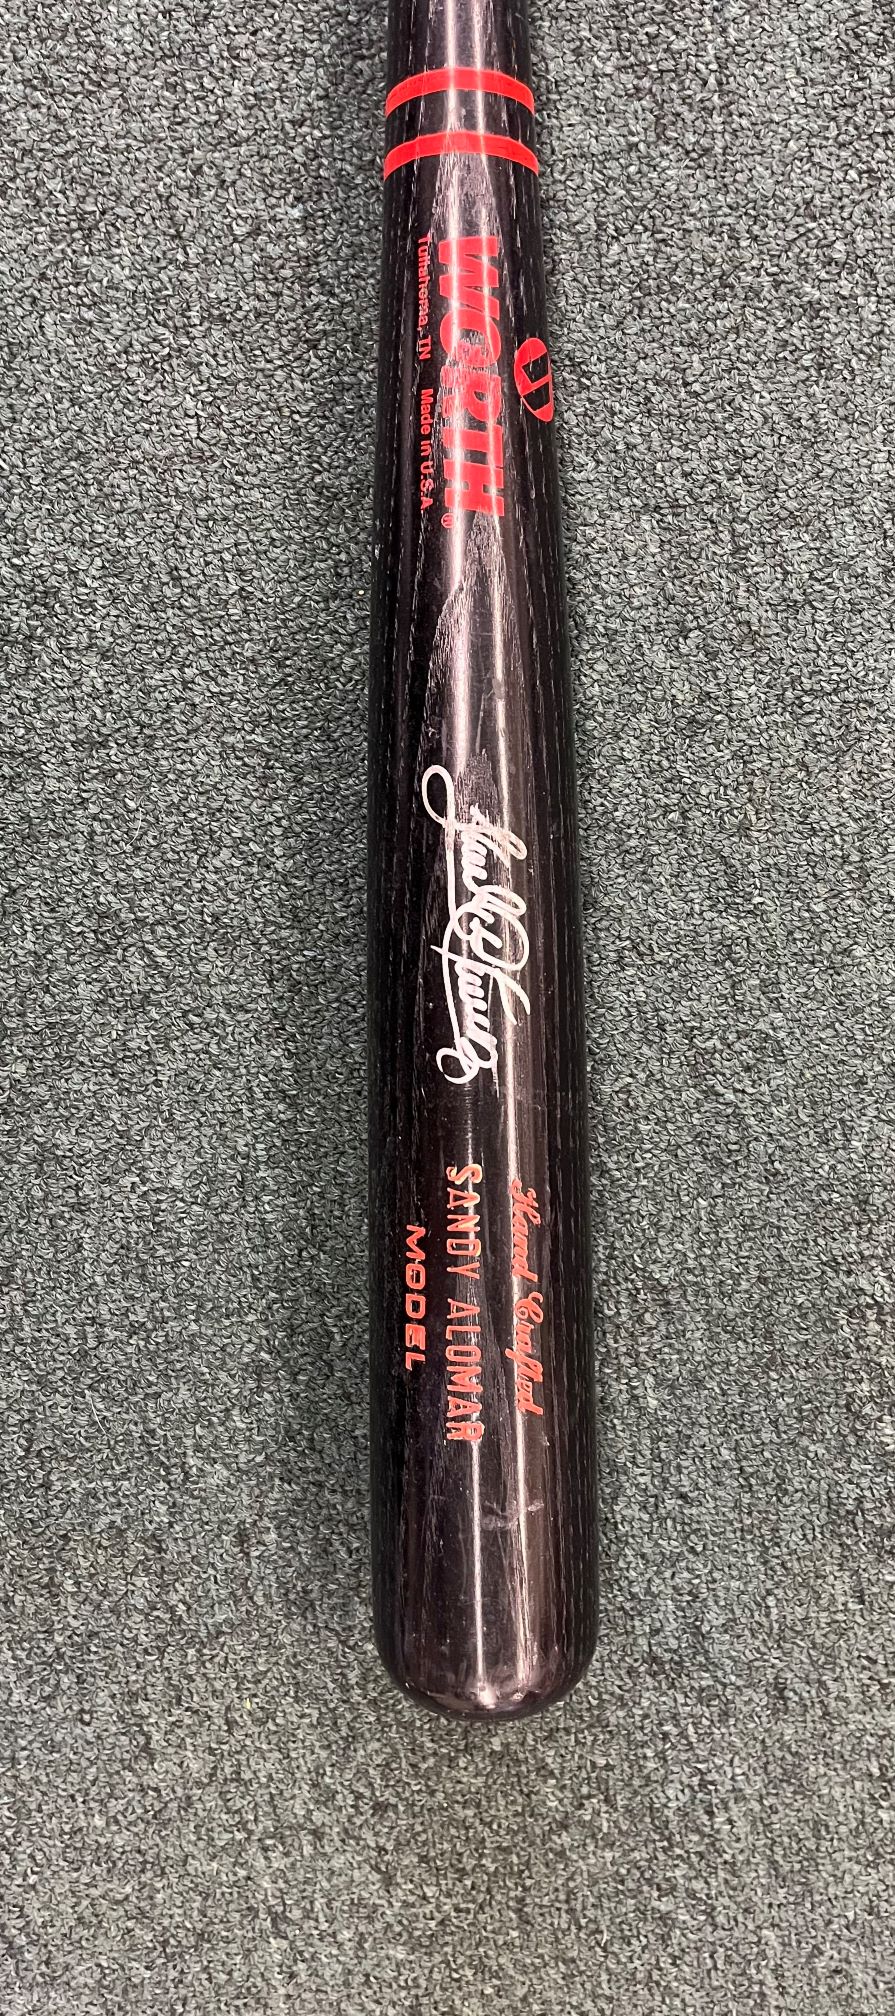 Sandy Alomar Autographed Game Used Bat